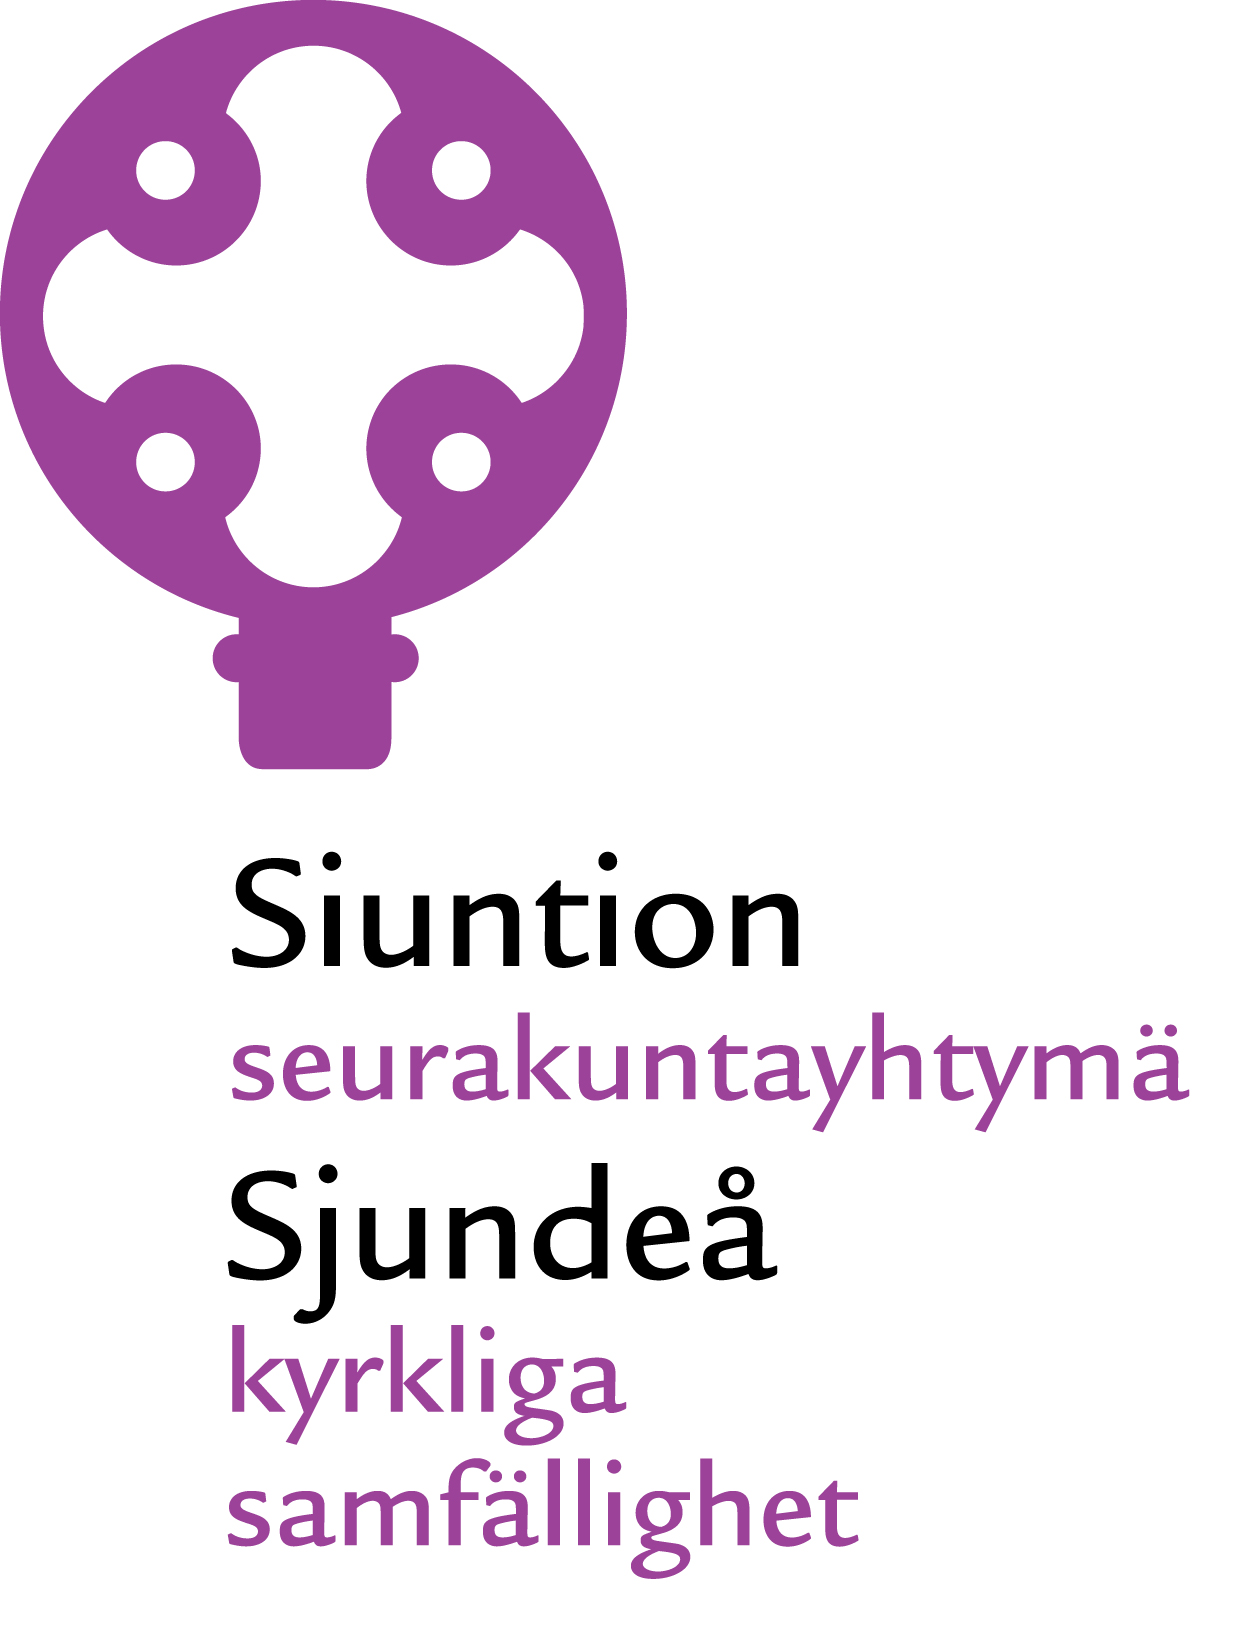 Siuntion seurakuntayhtymän logo